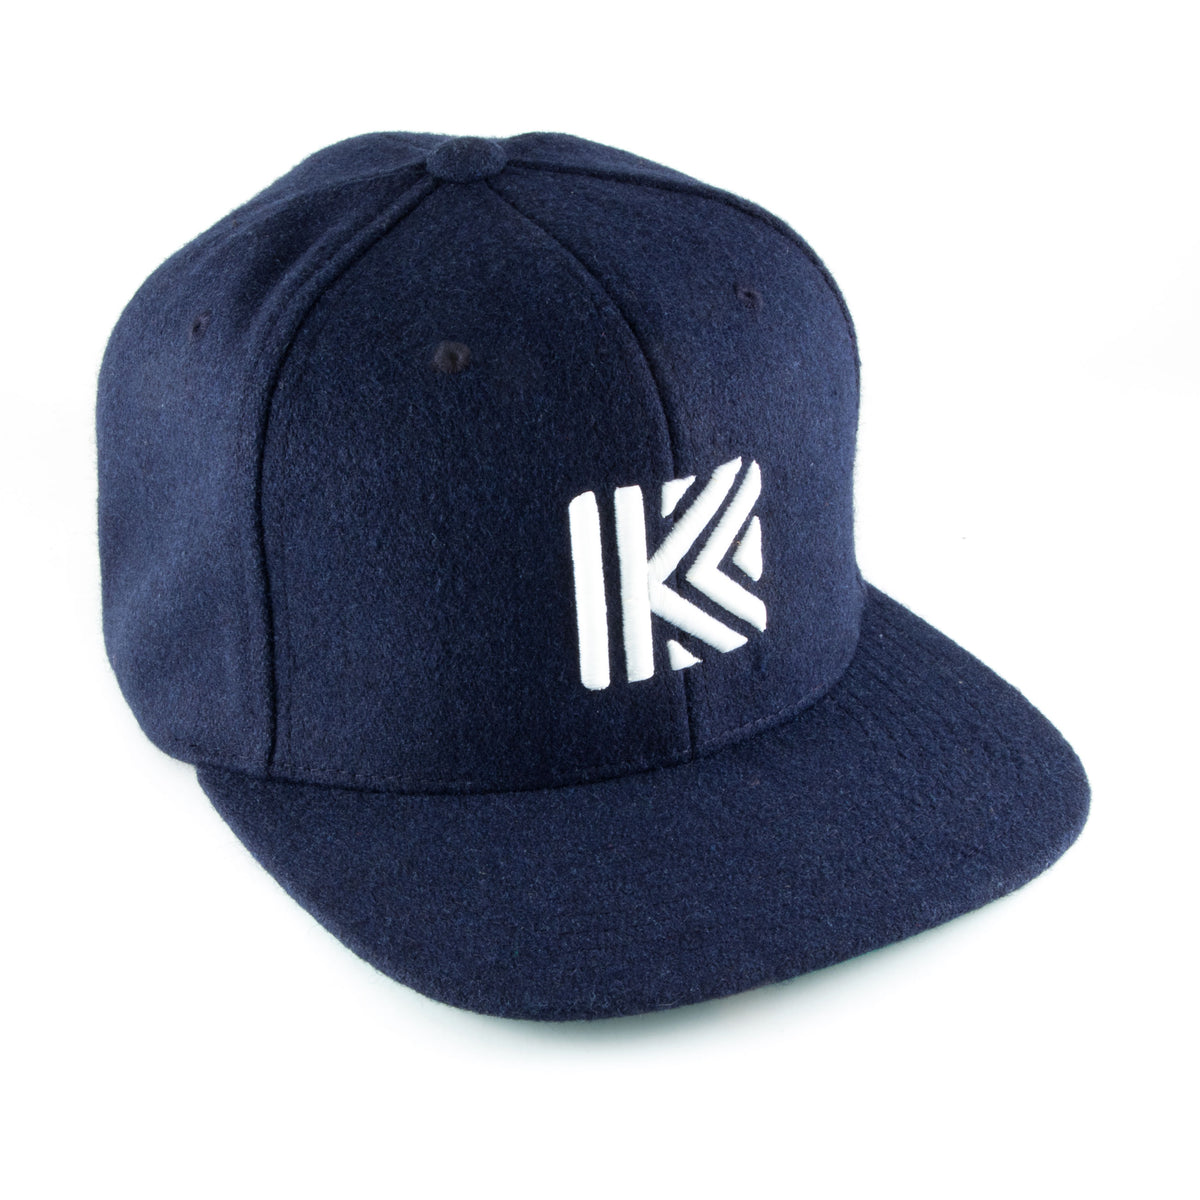 IKON Hat - Navy Blue/White